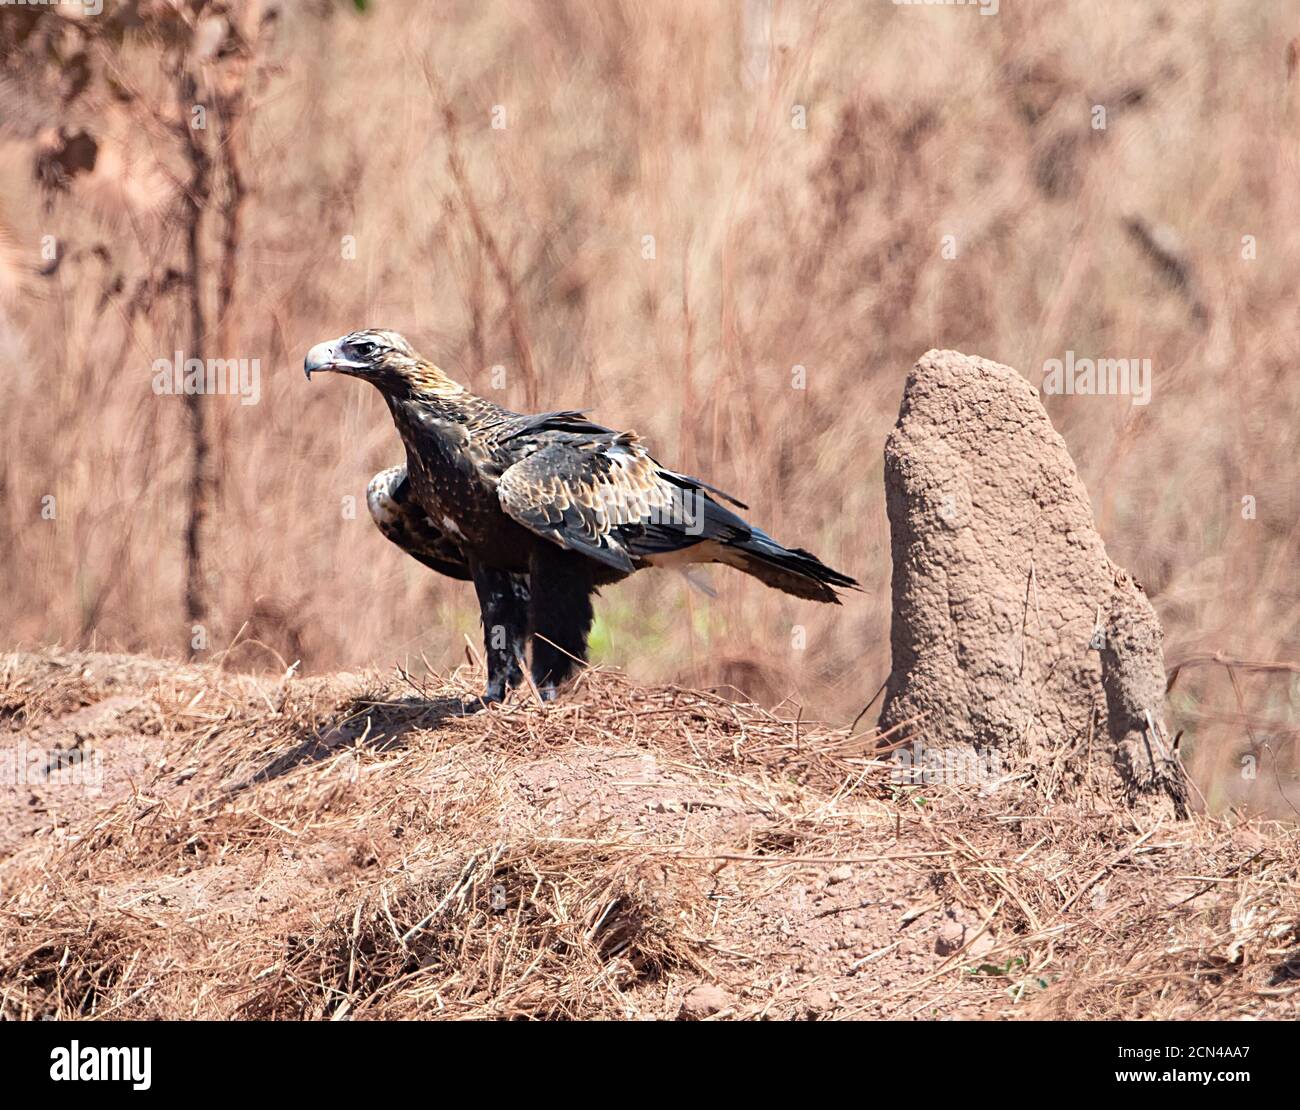 Wedge-tailed Eagle (Aquila audax) standing next to a termite mound, Arnhem Land, Northern Territory, Australia Stock Photo